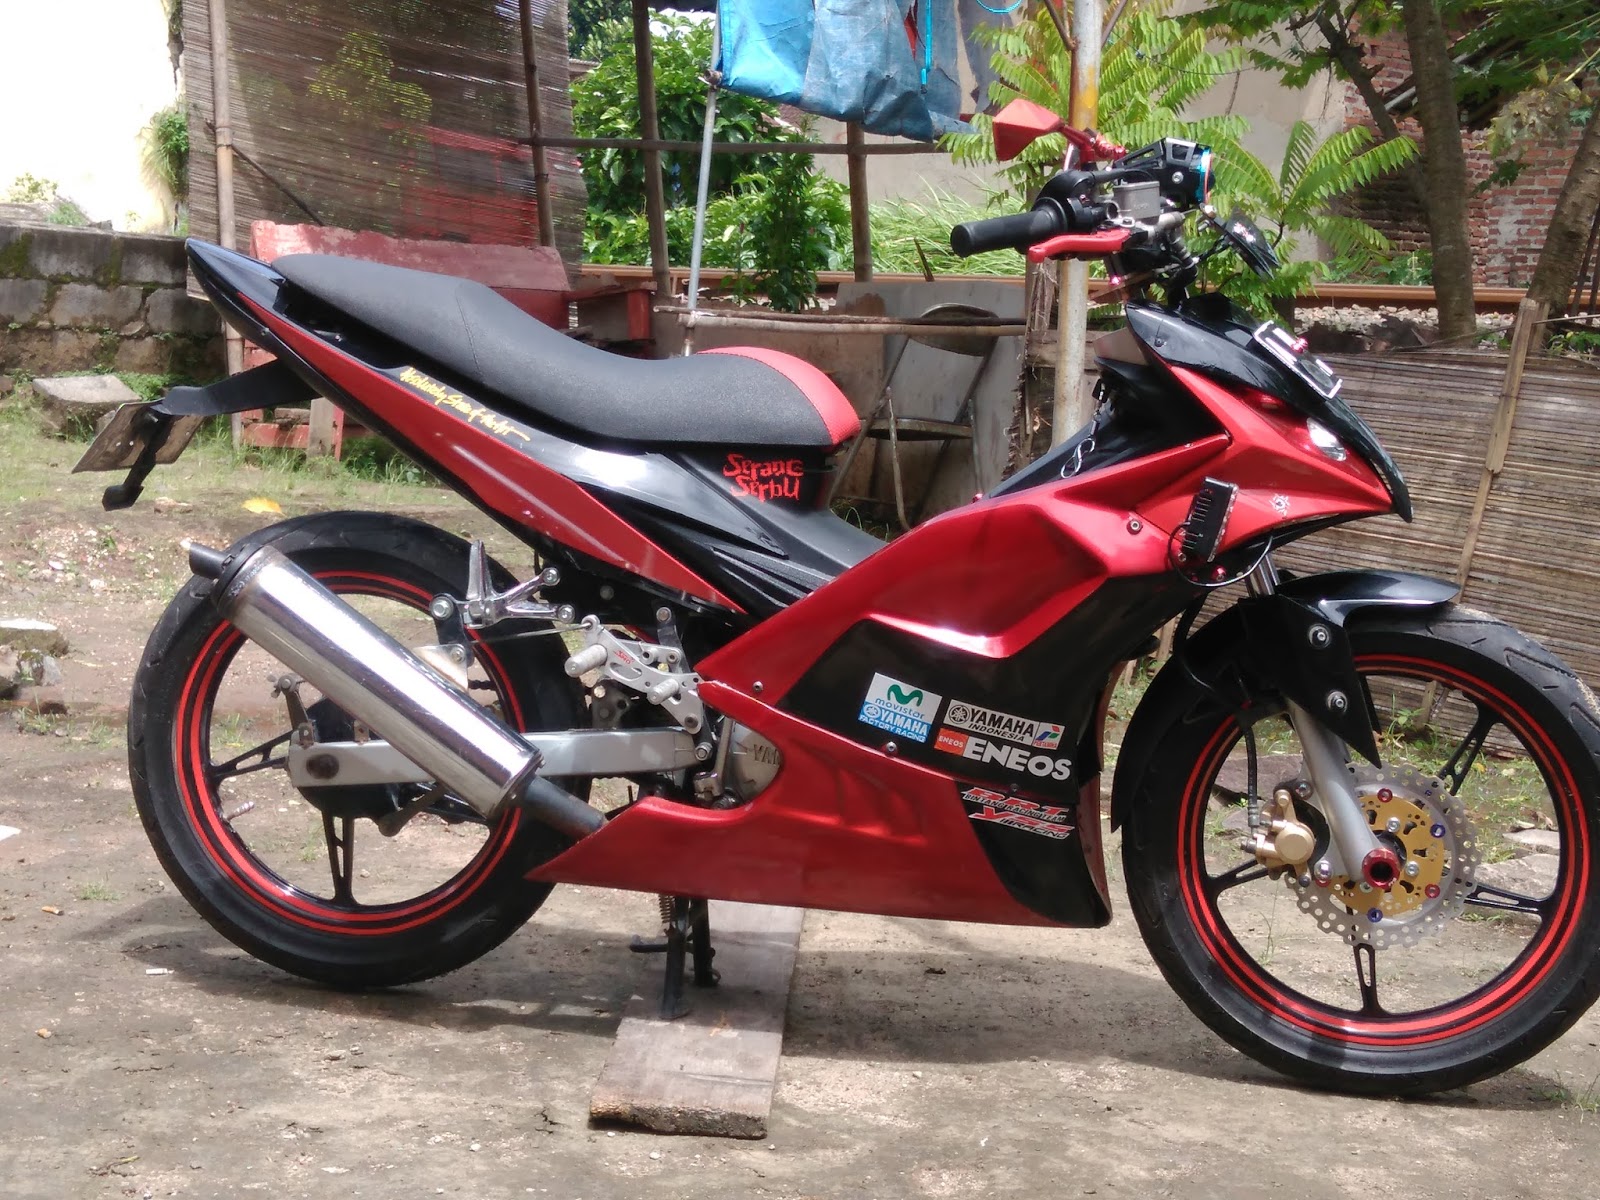 Curahan Hati Sang Rider MX BY Egiet Pranata JUPITER MX COMMUNITY